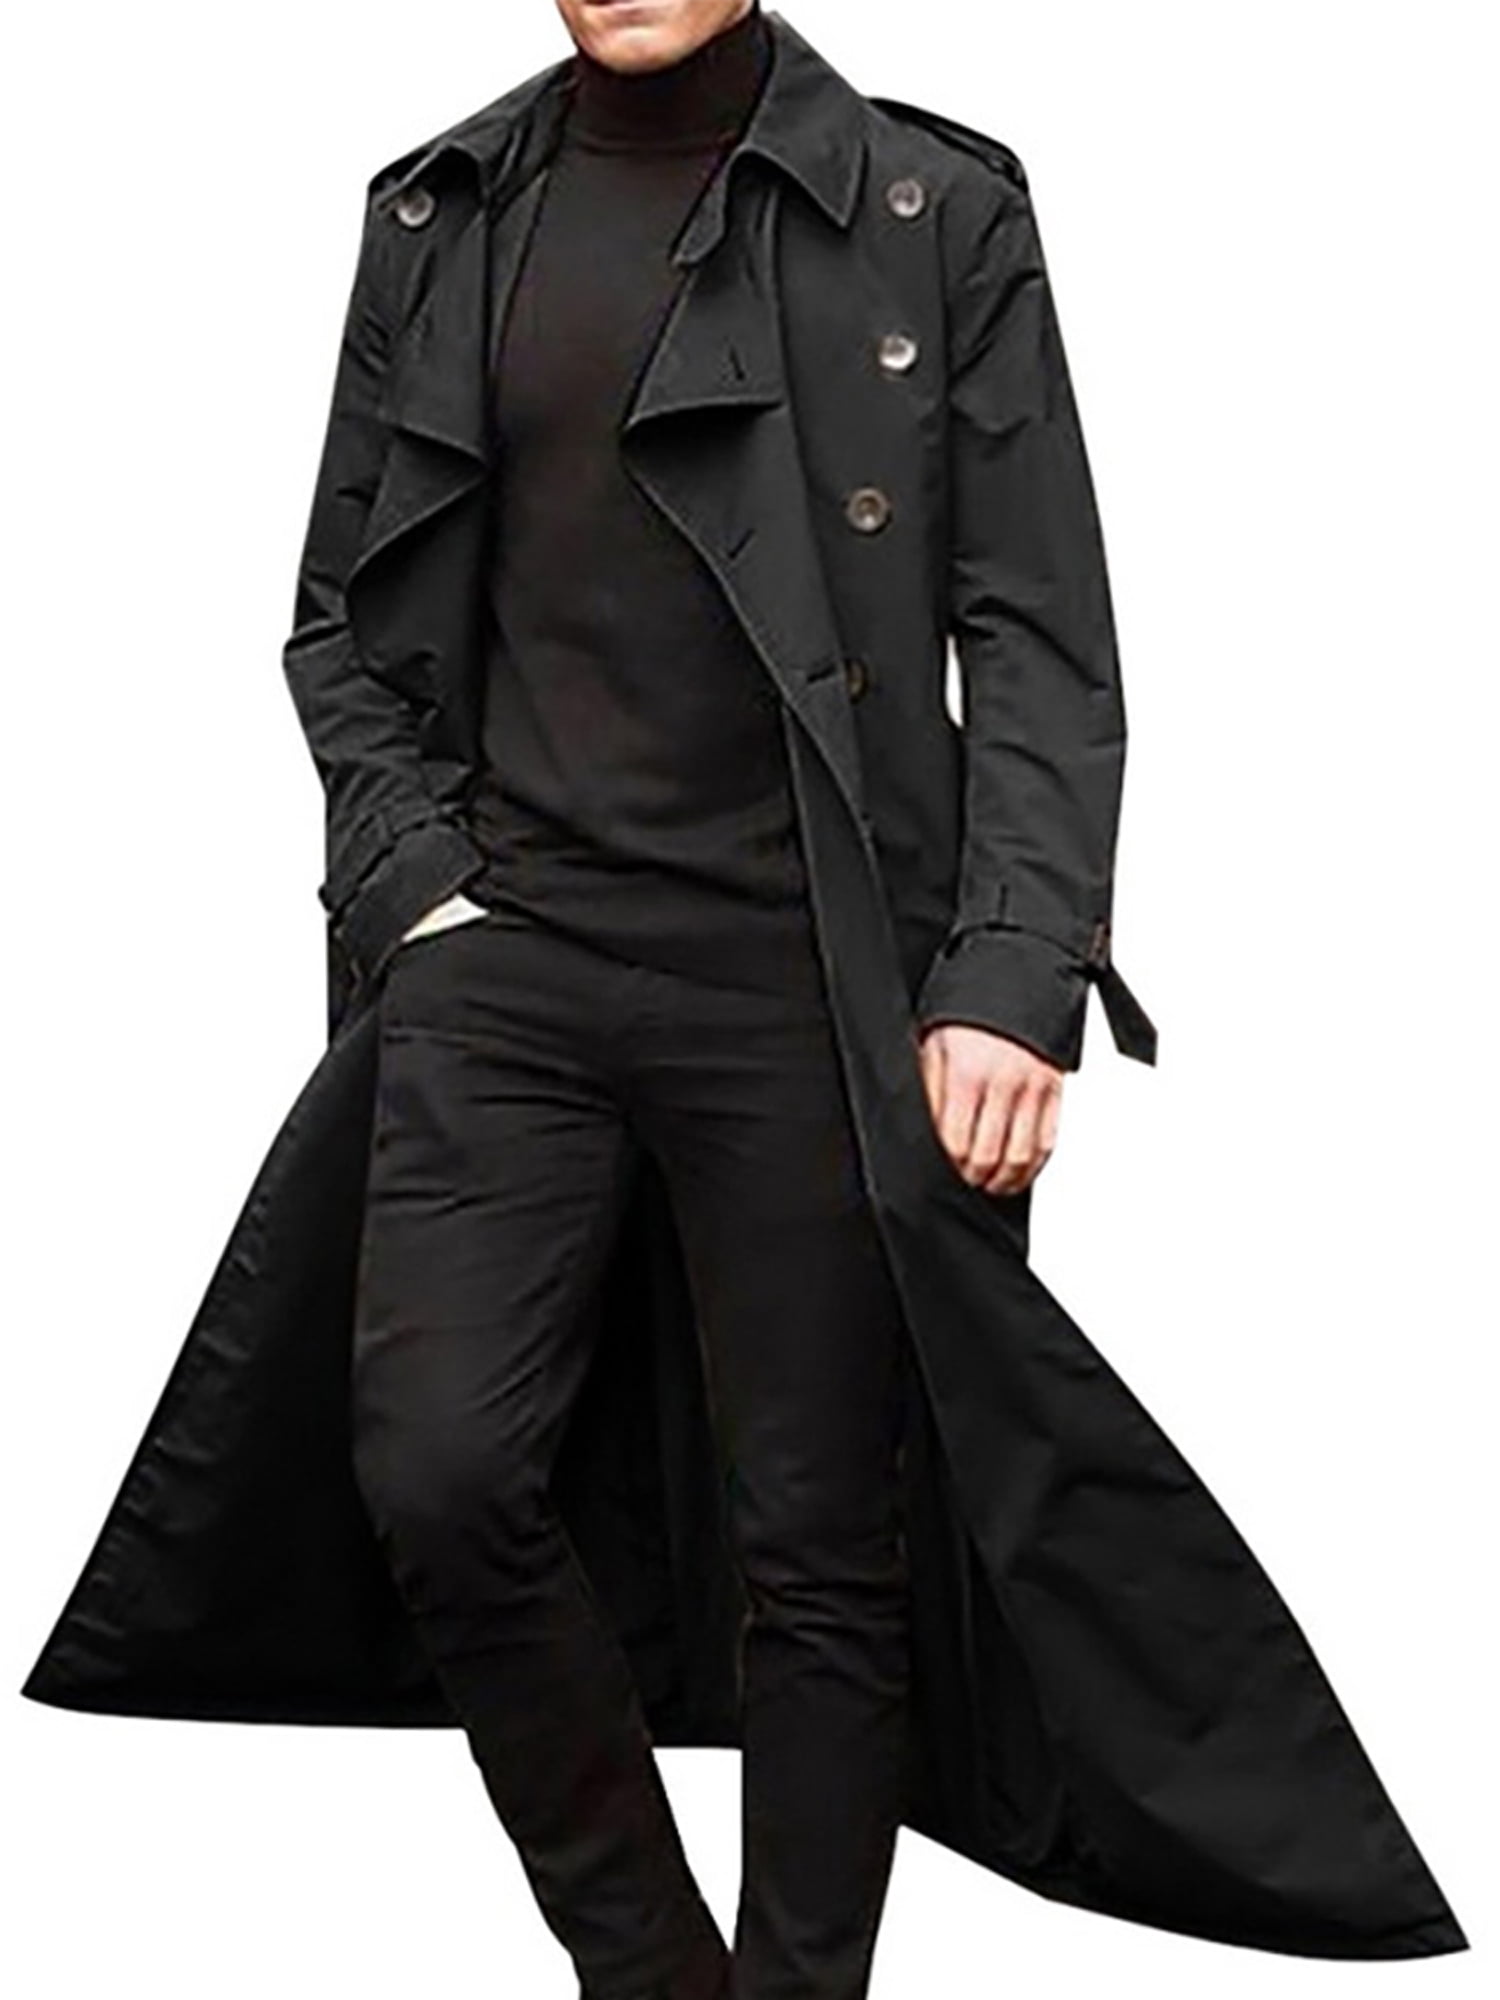 Mens Winter Warm Overcoat Fleece Lined Jacket Trench Coat Casual Outwear Tops